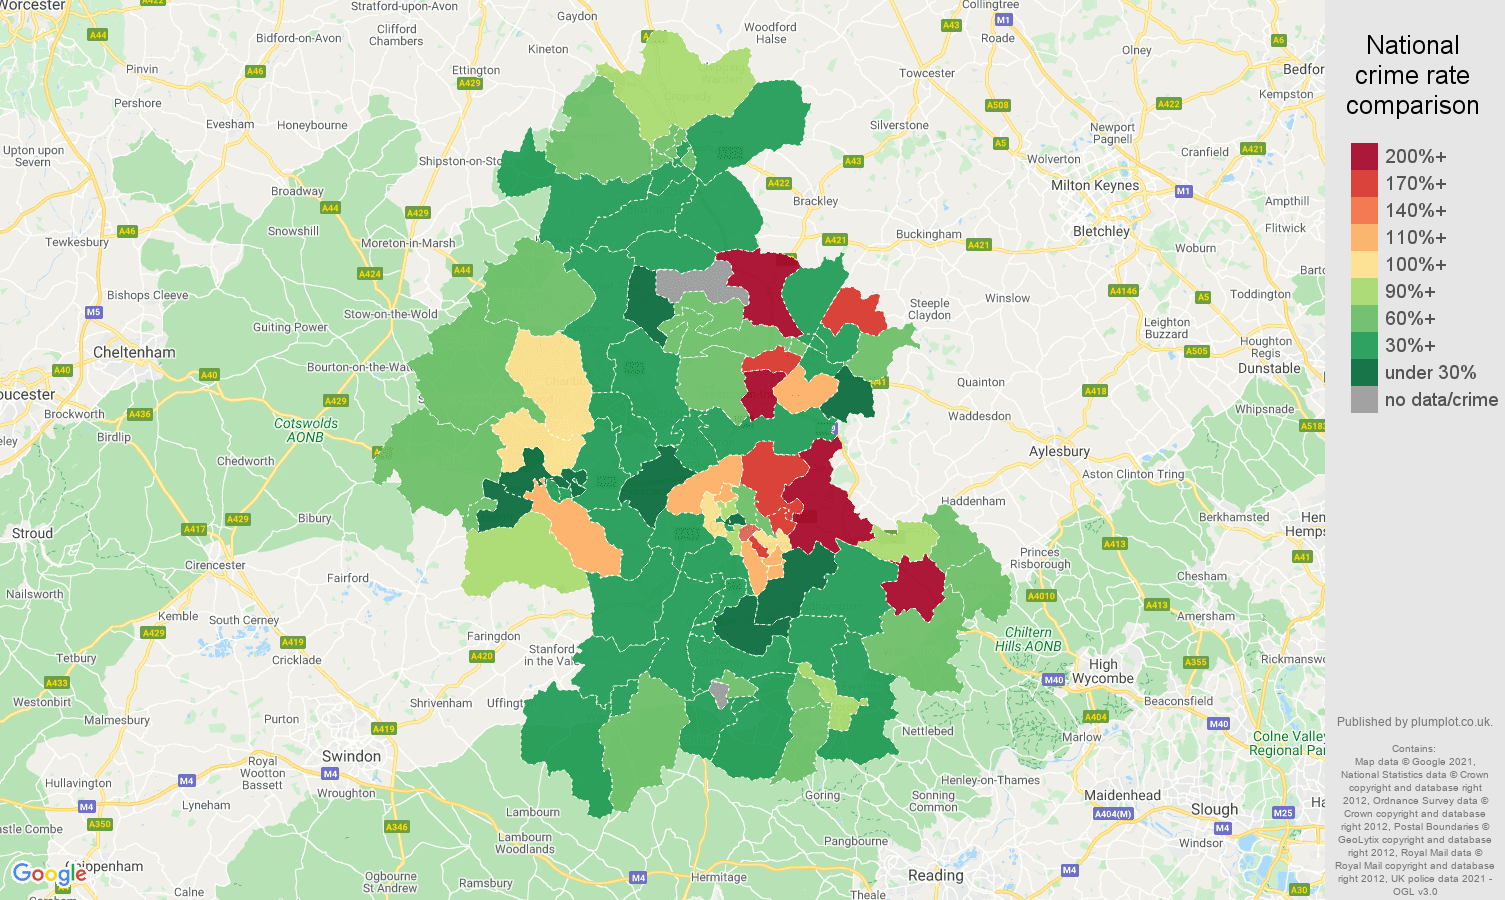 Oxford vehicle crime rate comparison map